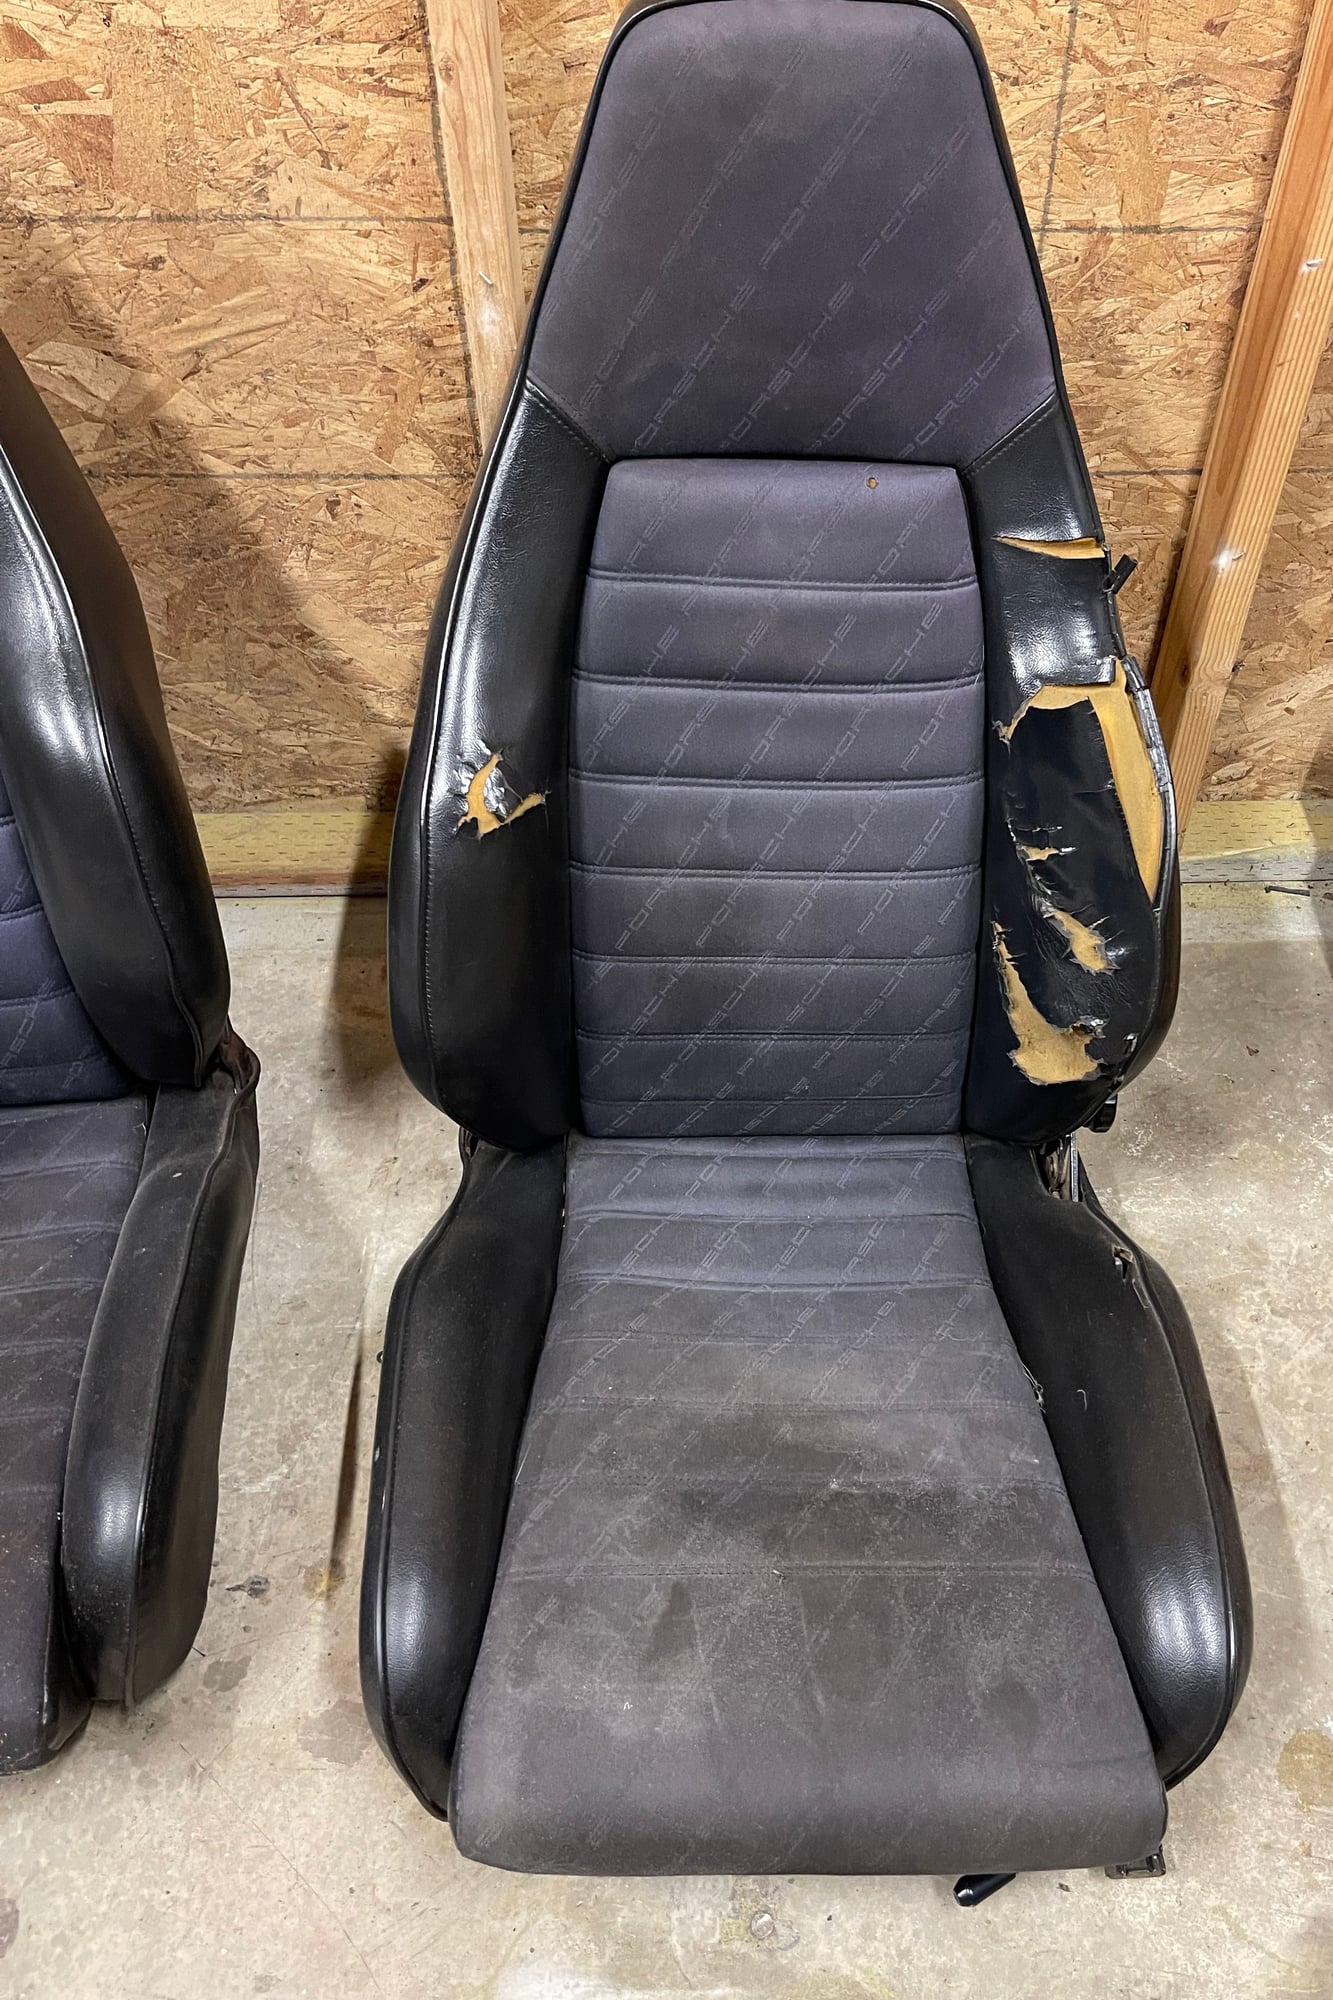 Interior/Upholstery - 81-84 Sport Seats w/ Porsche Script - Used - 1981 to 1984 Porsche 911 - Seattle, WA 98102, United States